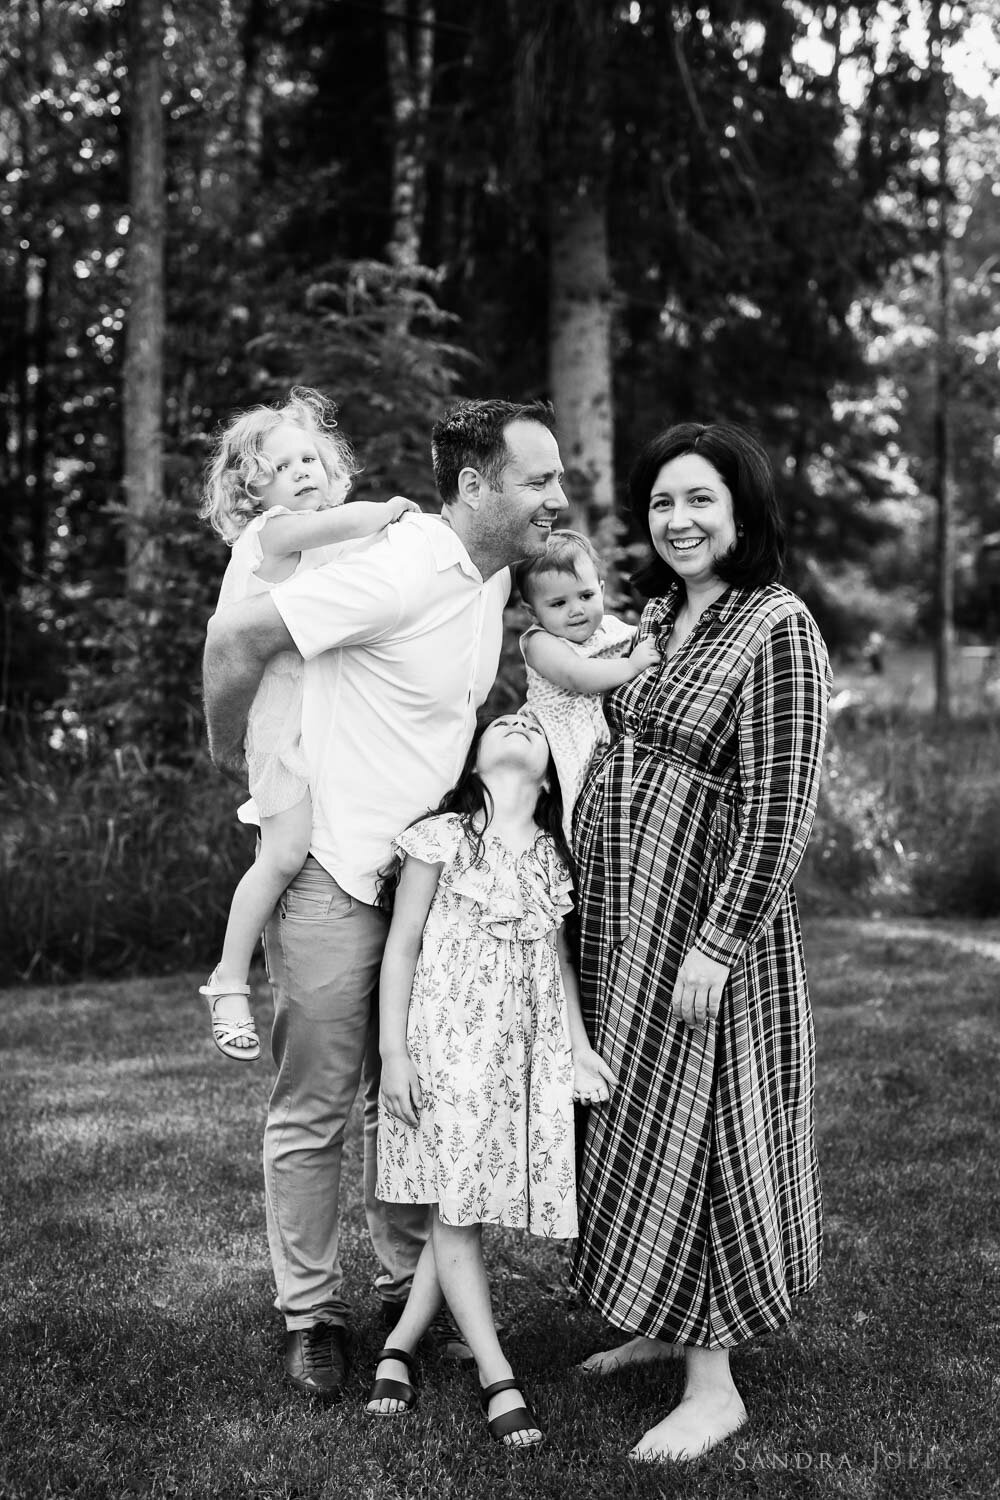 stockhholm-family-photo-session-by-sandra-jolly-photography.jpg